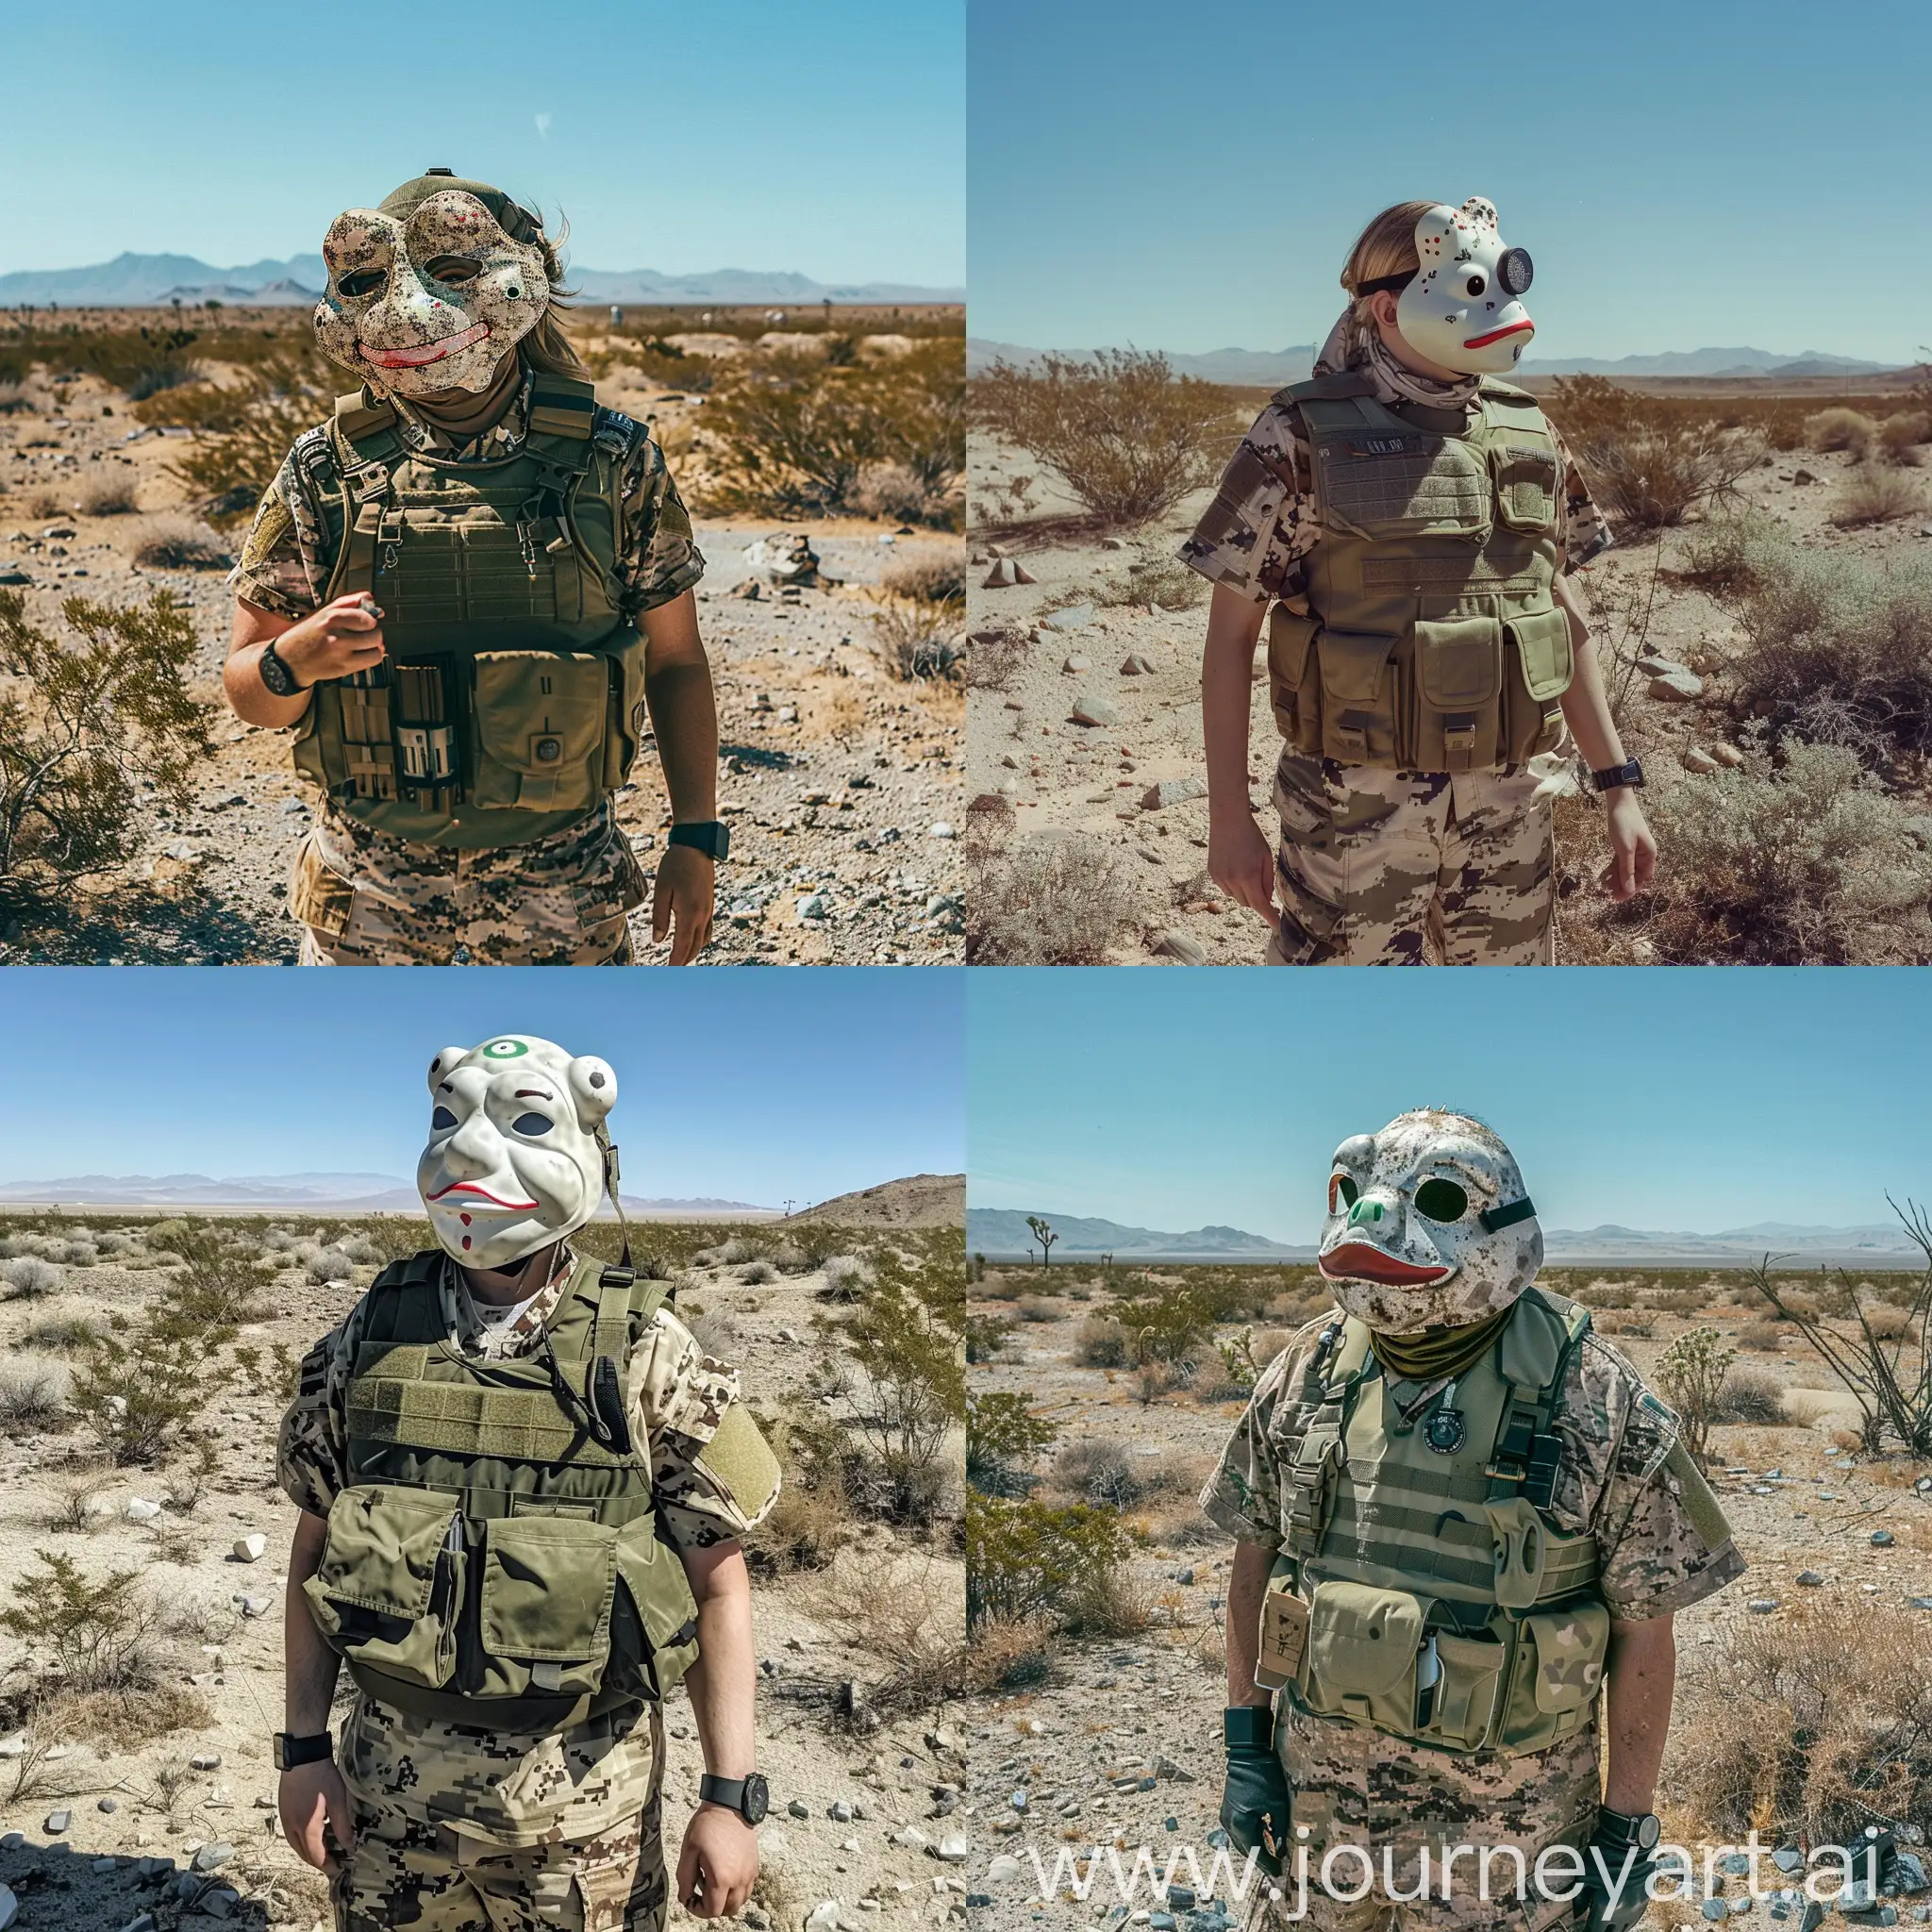 Pepe-the-Frog-Masked-Figure-in-Arid-Desert-Landscape